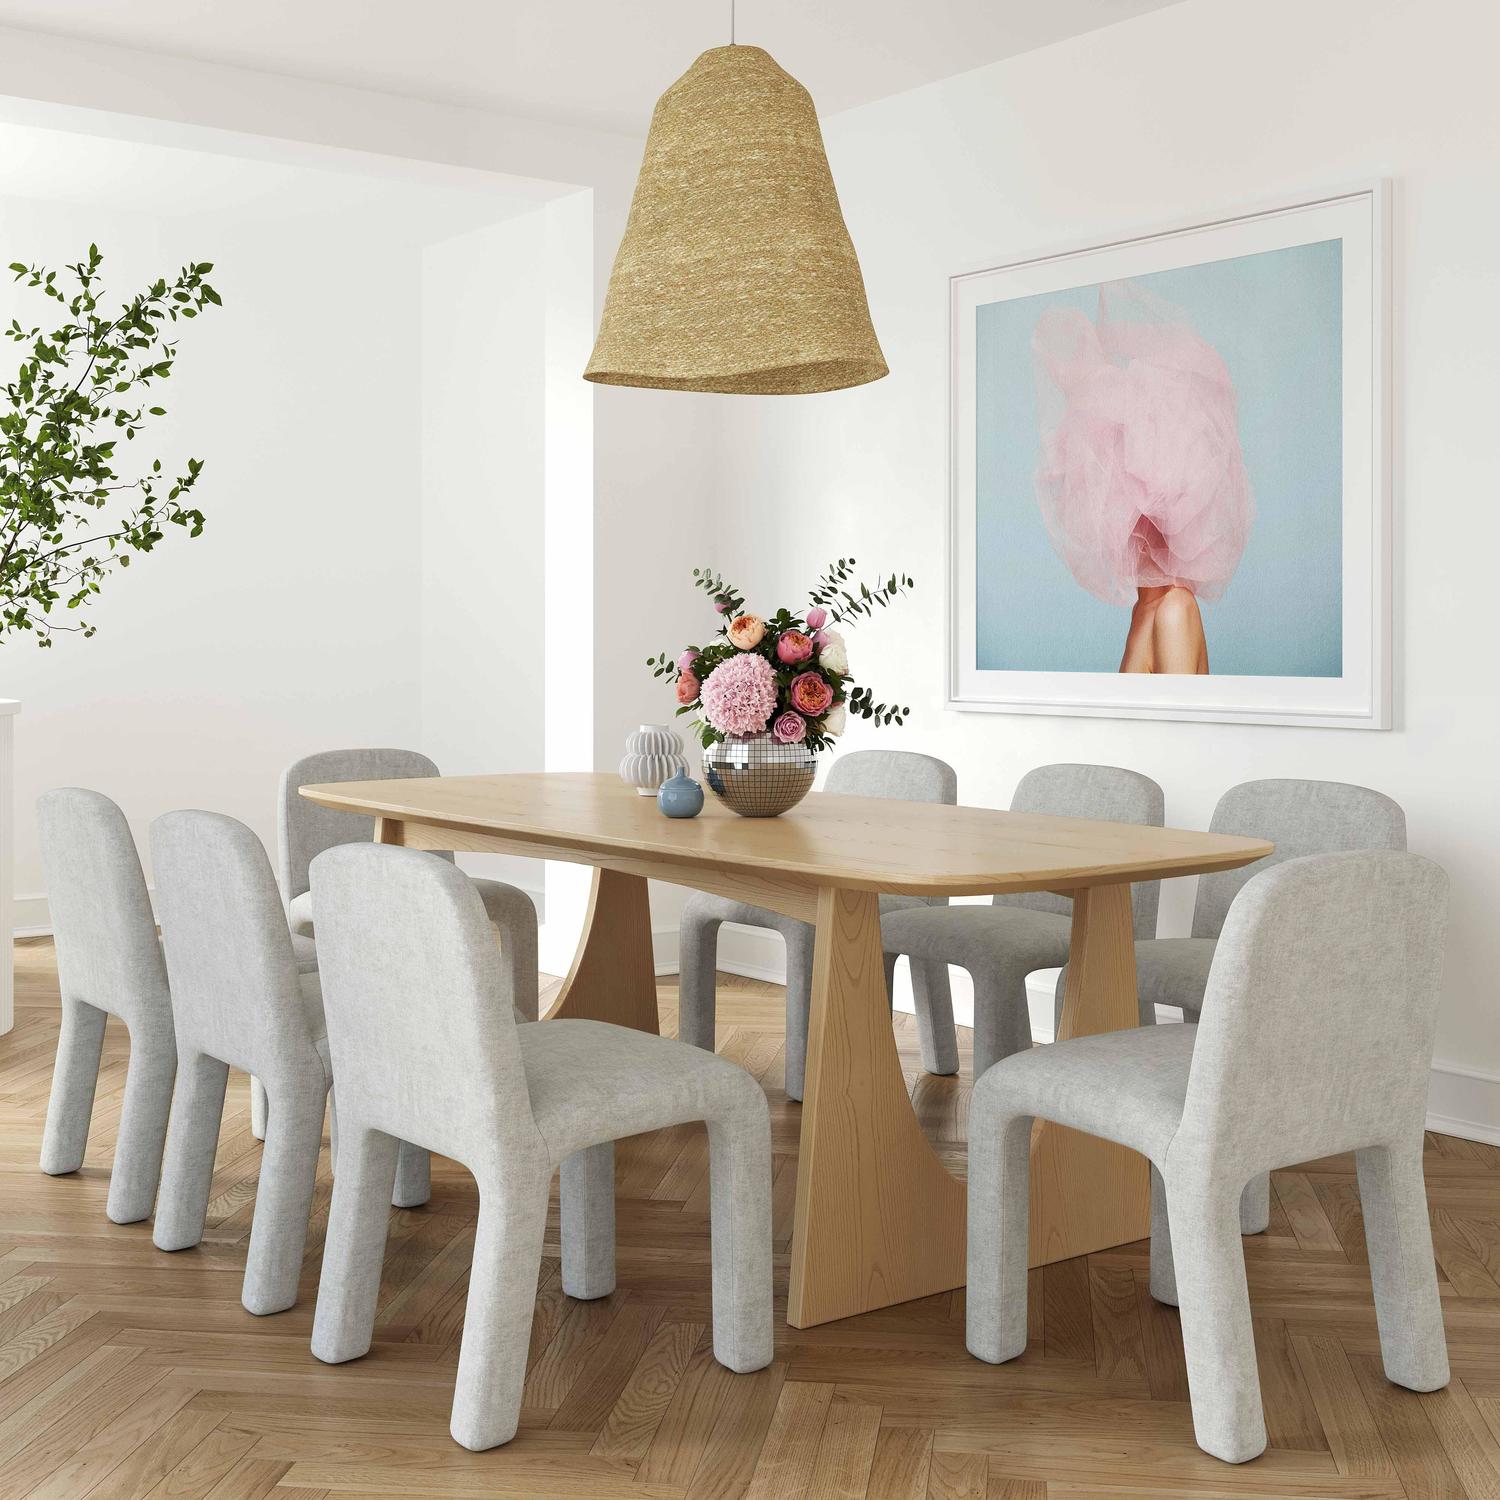 nickel lantern pendant light Contemporary Design Furniture Pendants Natural